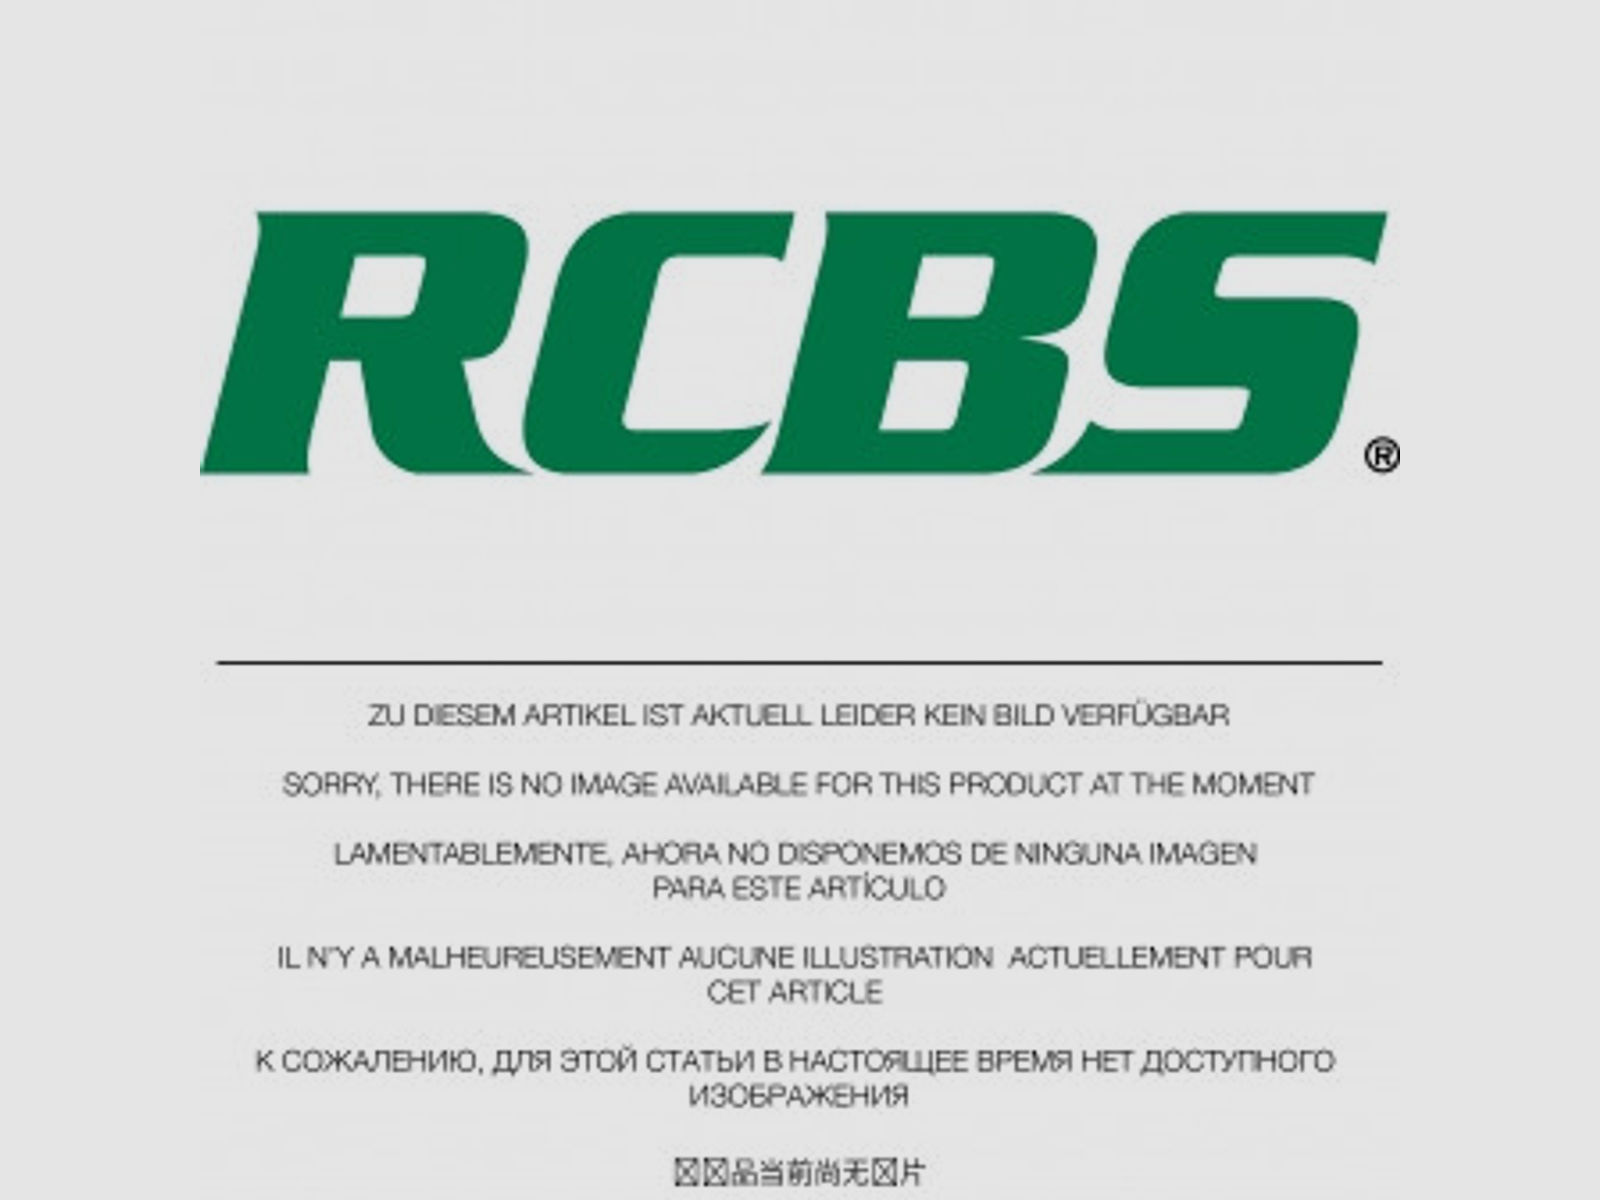 RCBS Gold Medal Match Setzmatrize für Kaliber: 6mm Benchrest Remington 16149